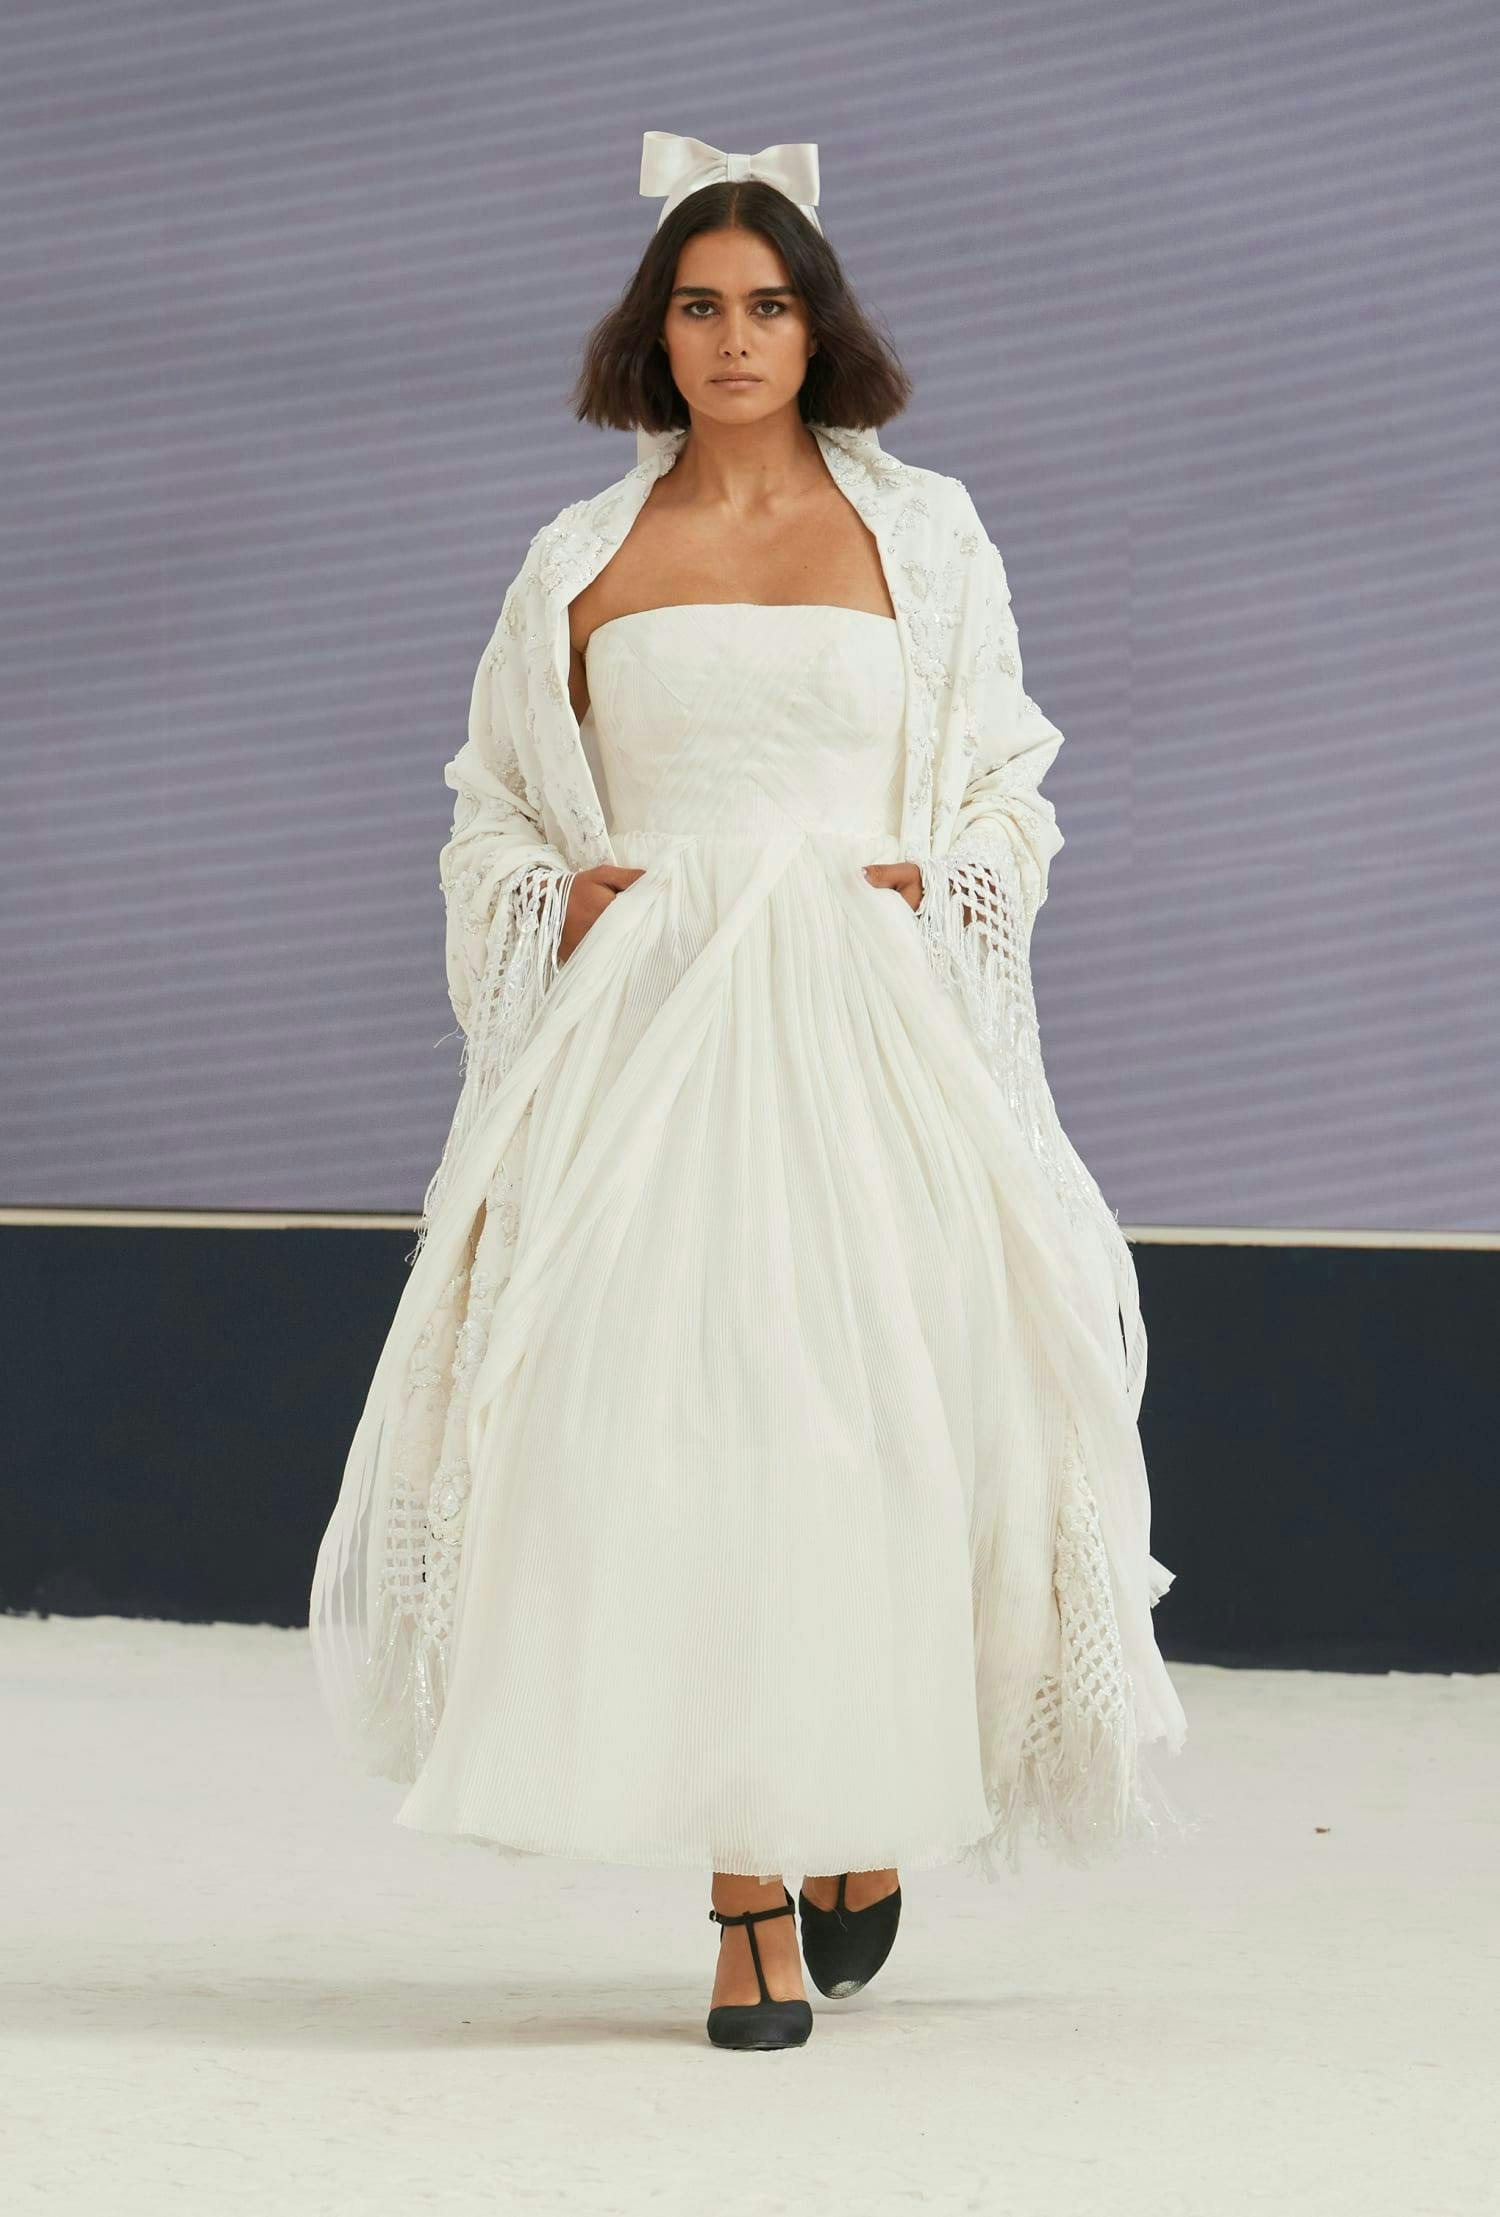 A model in a Chanel wedding dress.